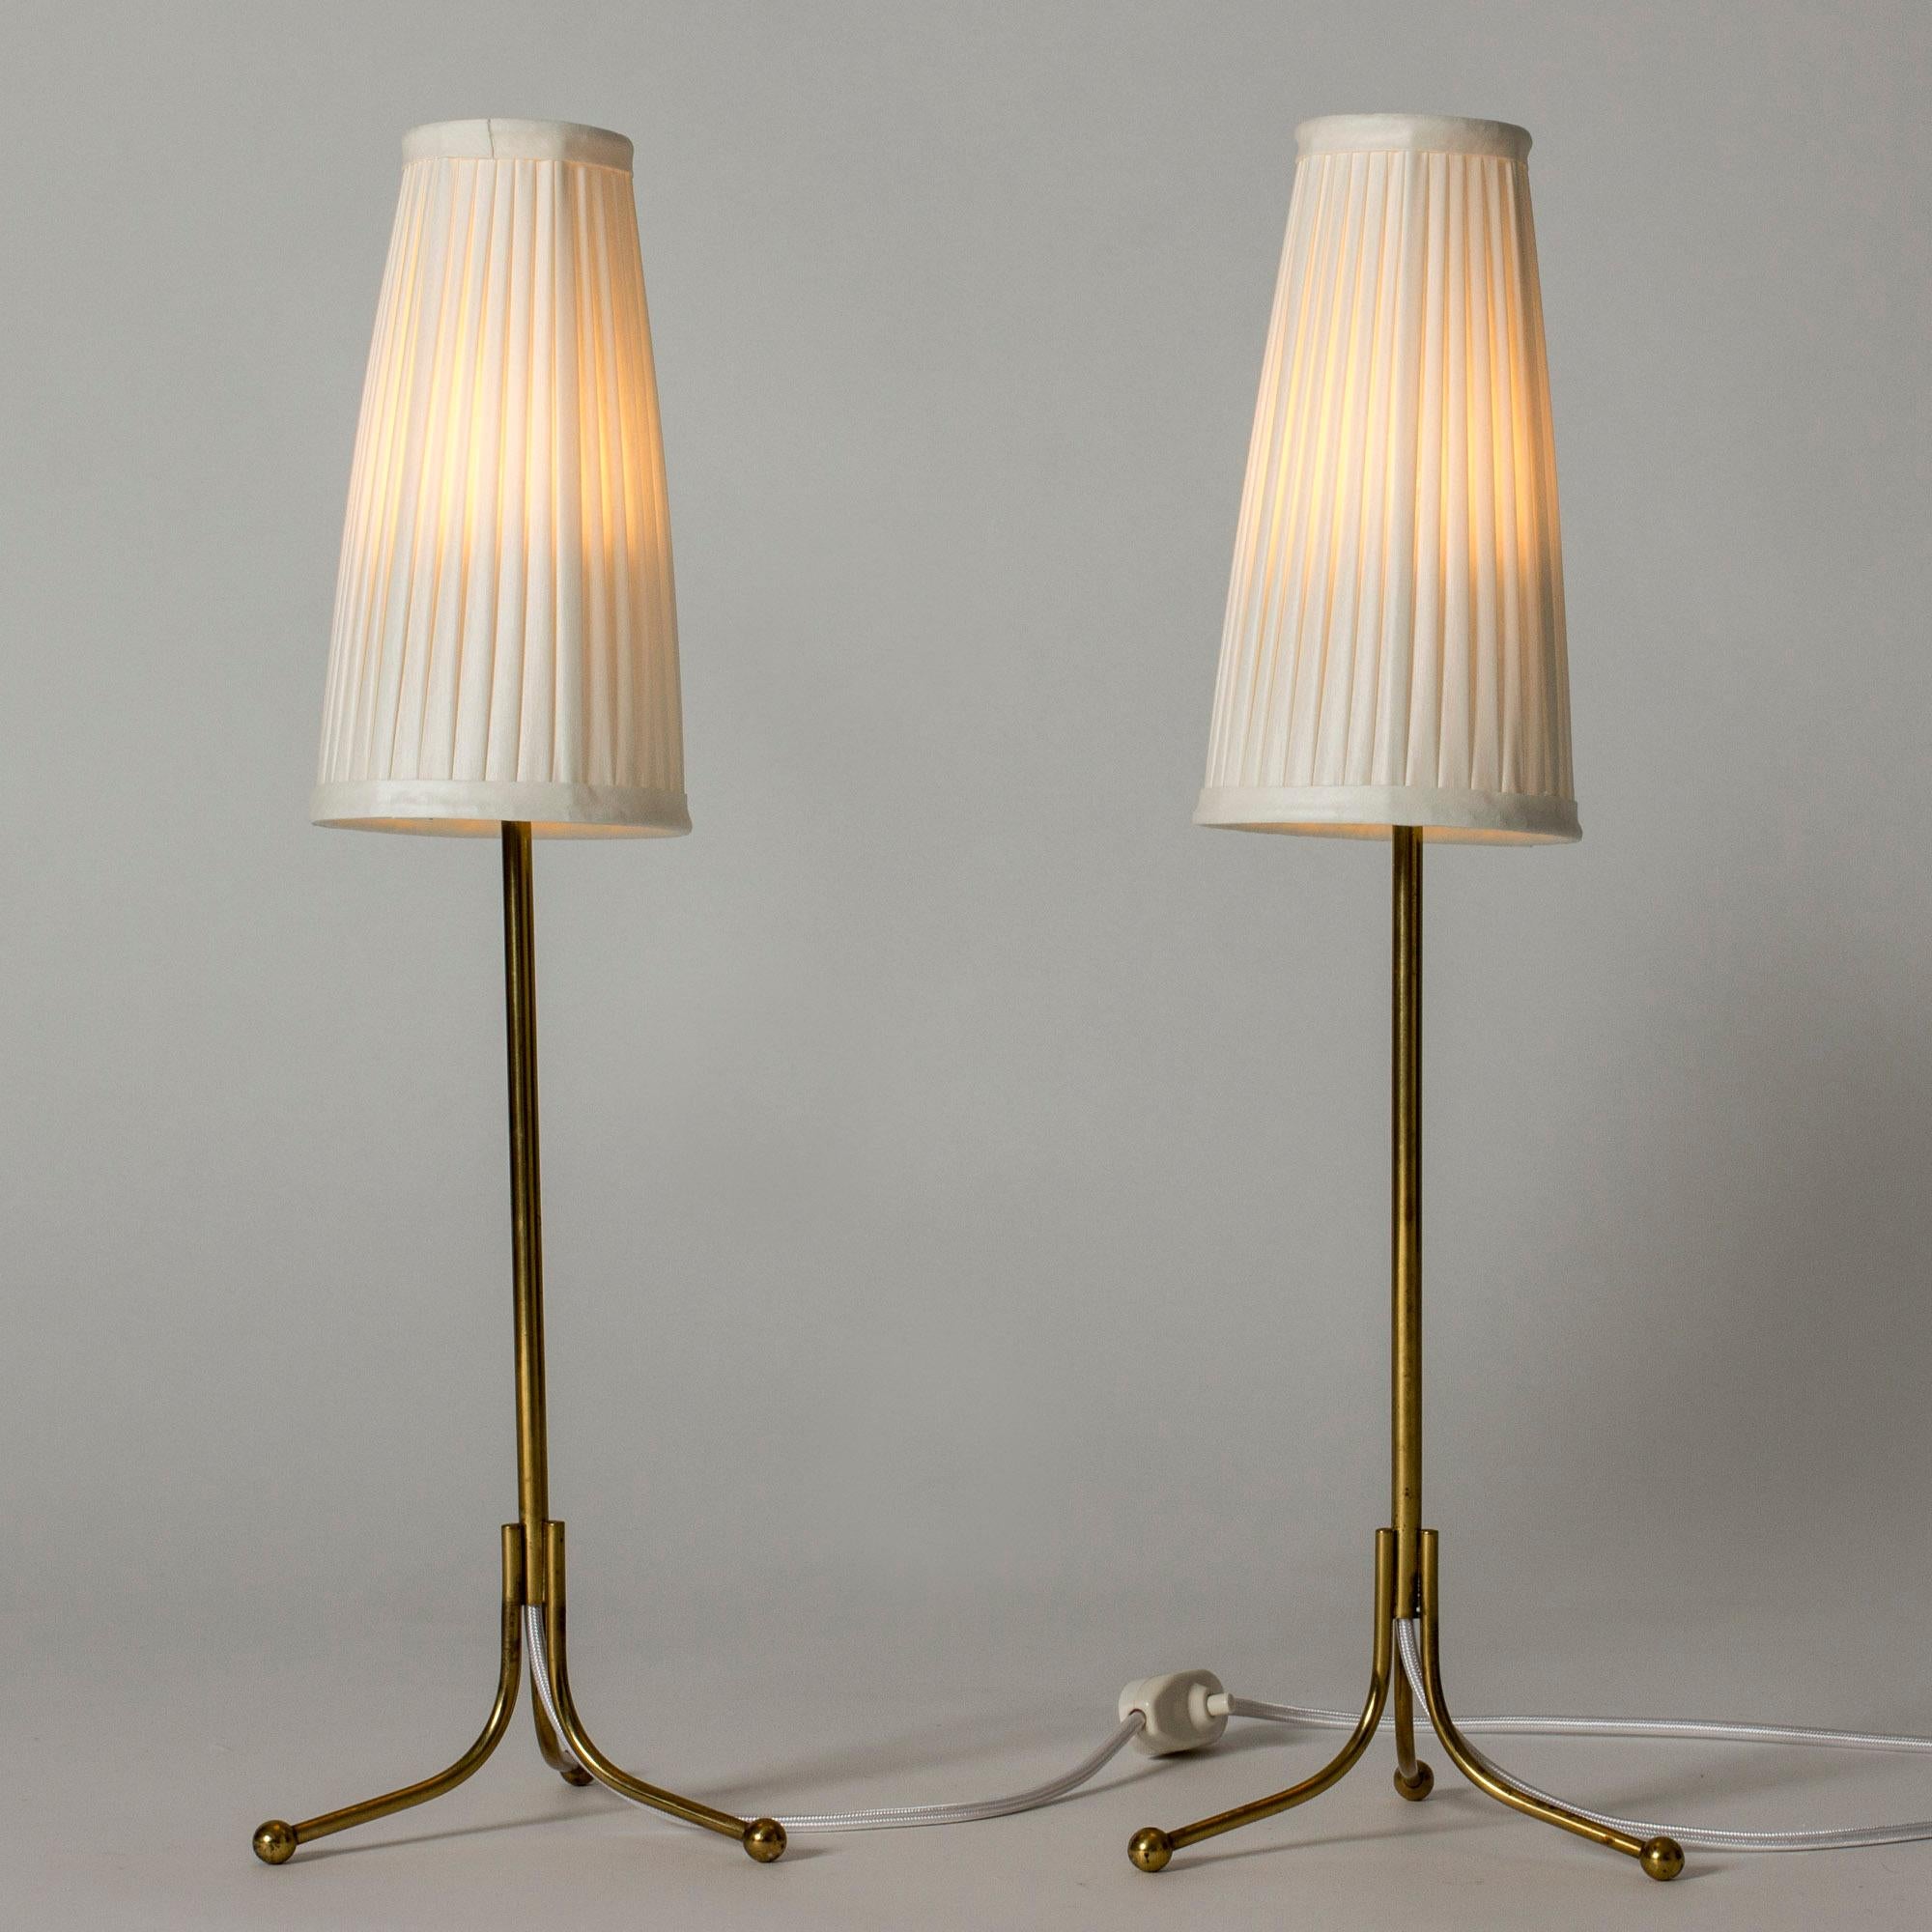 Mid-20th Century Pair of Brass Table Lamps by Josef Frank, Svenskt Tenn, Sweden, 1950s